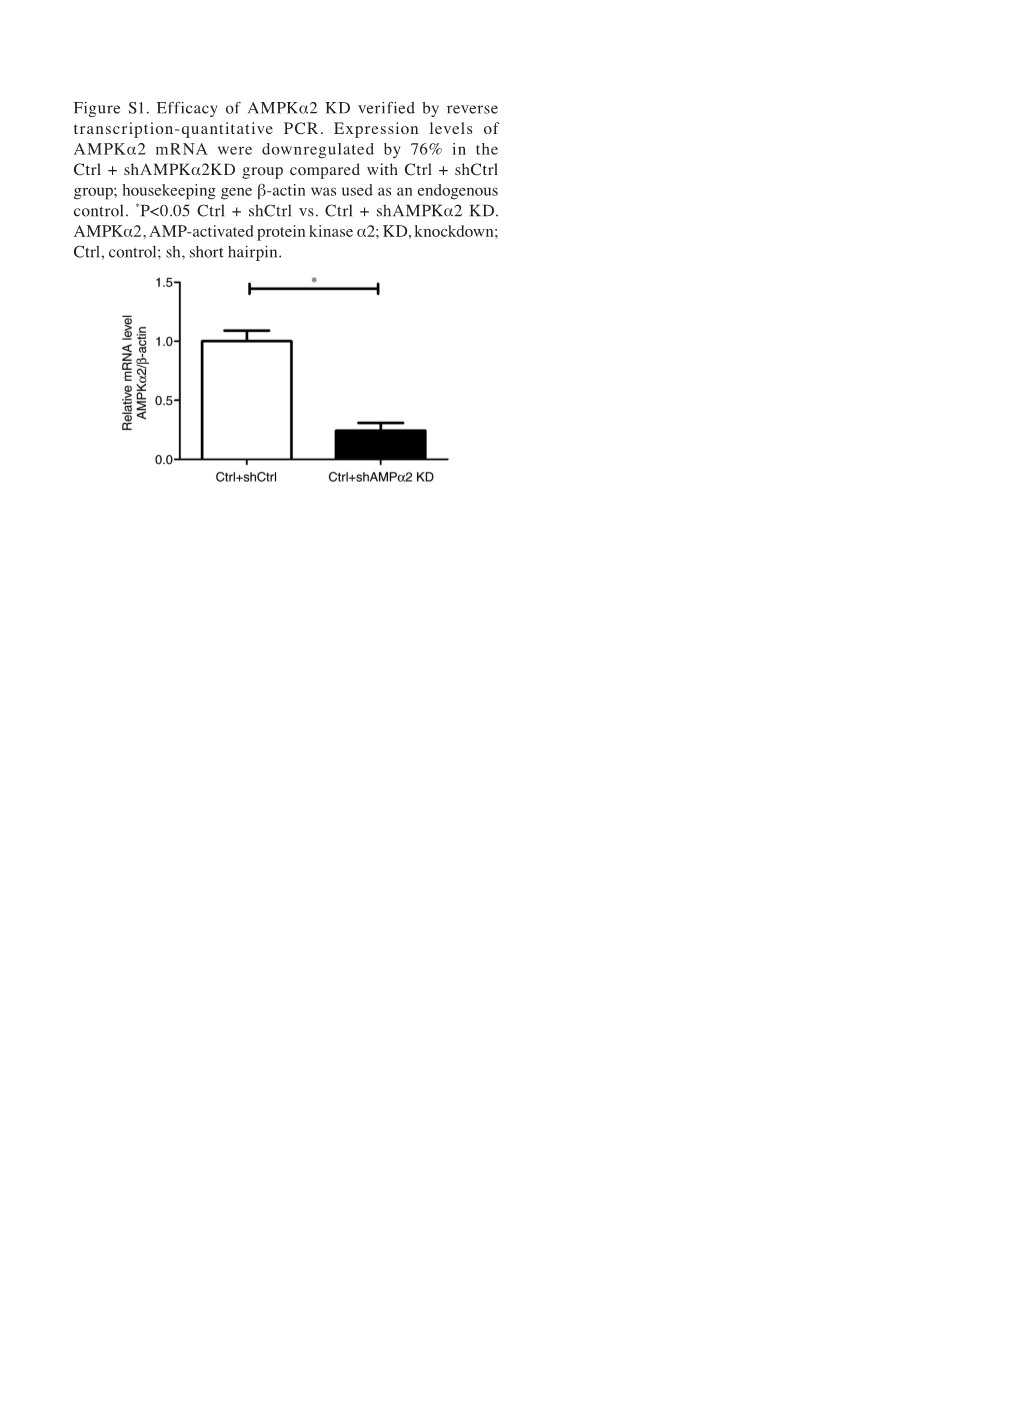 Figure S1. Efficacy of Ampkα2 KD Verified by Reverse Transcription-Quantitative PCR